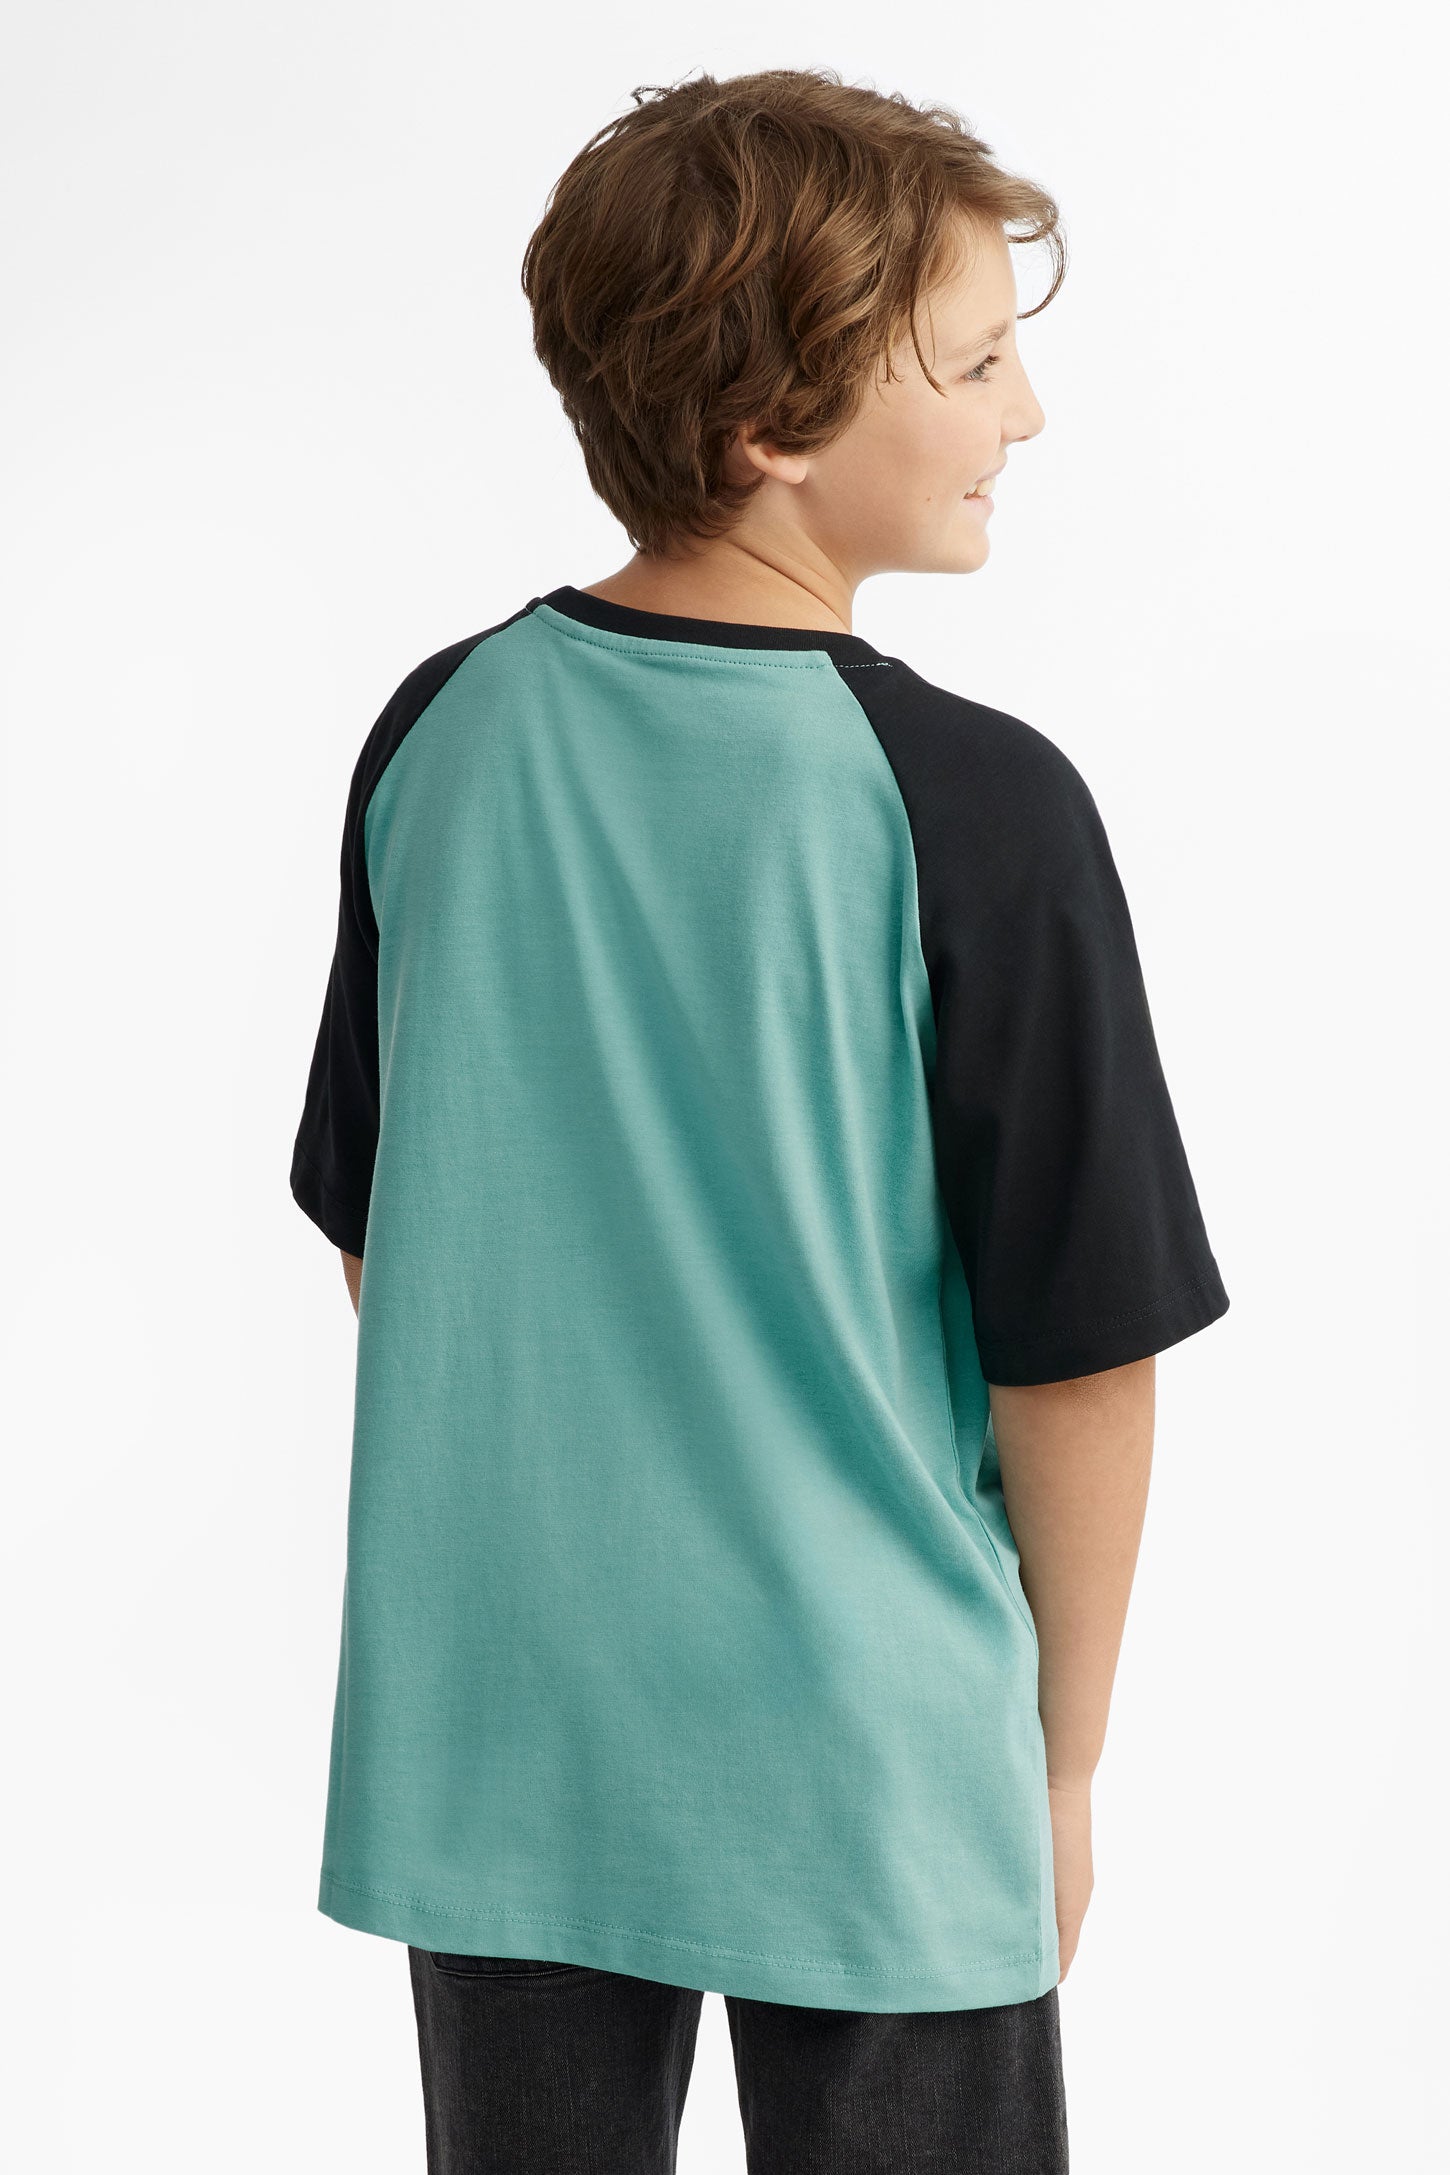 T-shirt manches courtes raglan coton, 2/25$ - Ado garçon && TURQUOISE